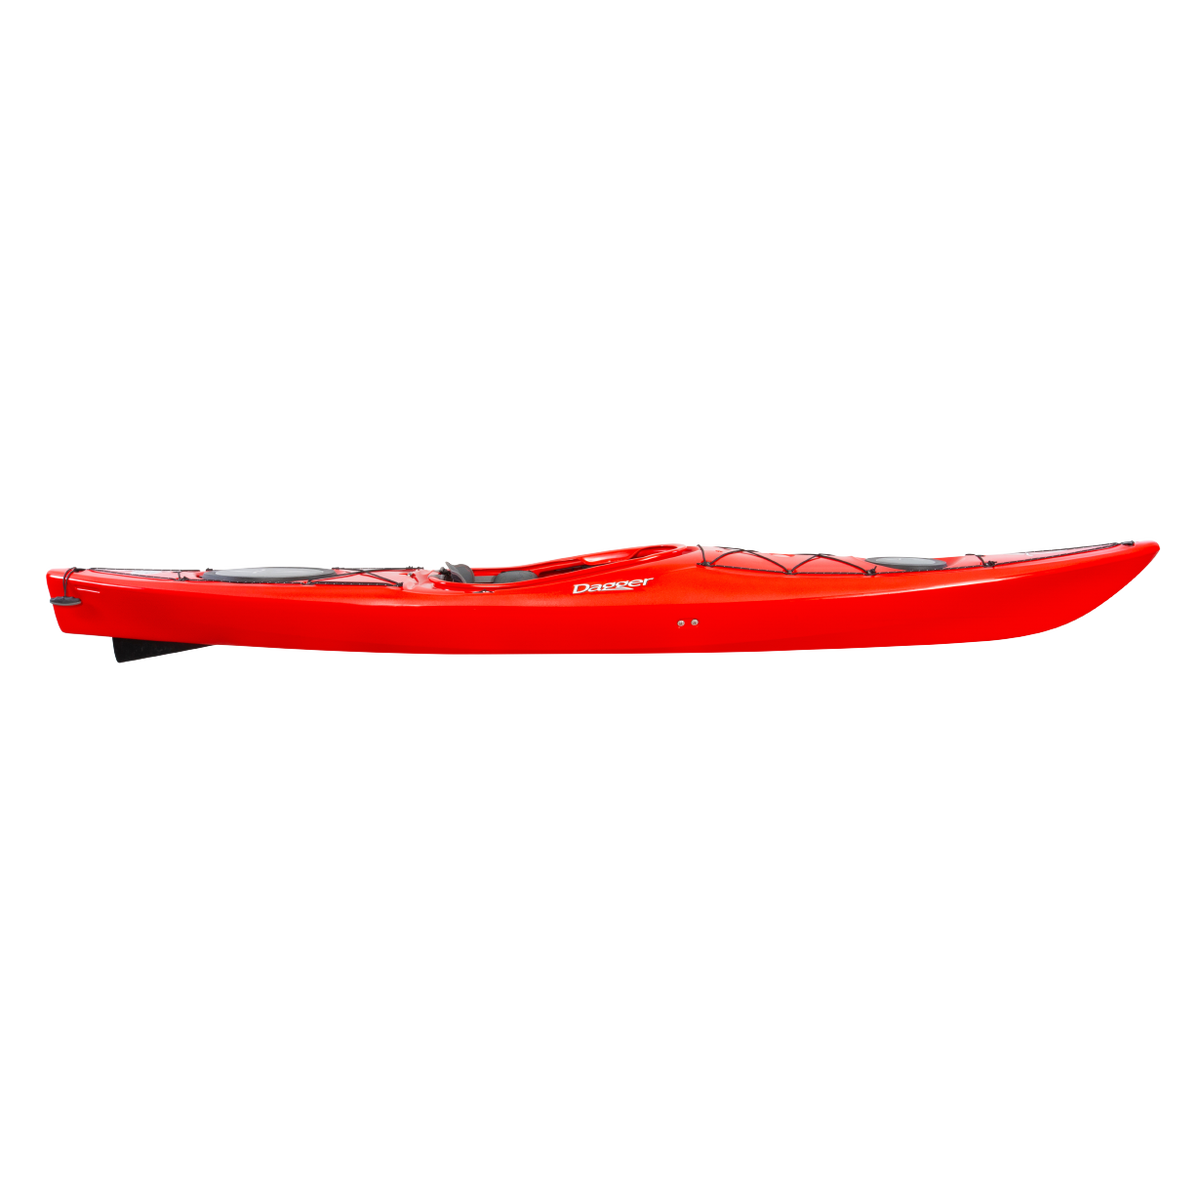 Dagger Stratos 12.5 S - Red